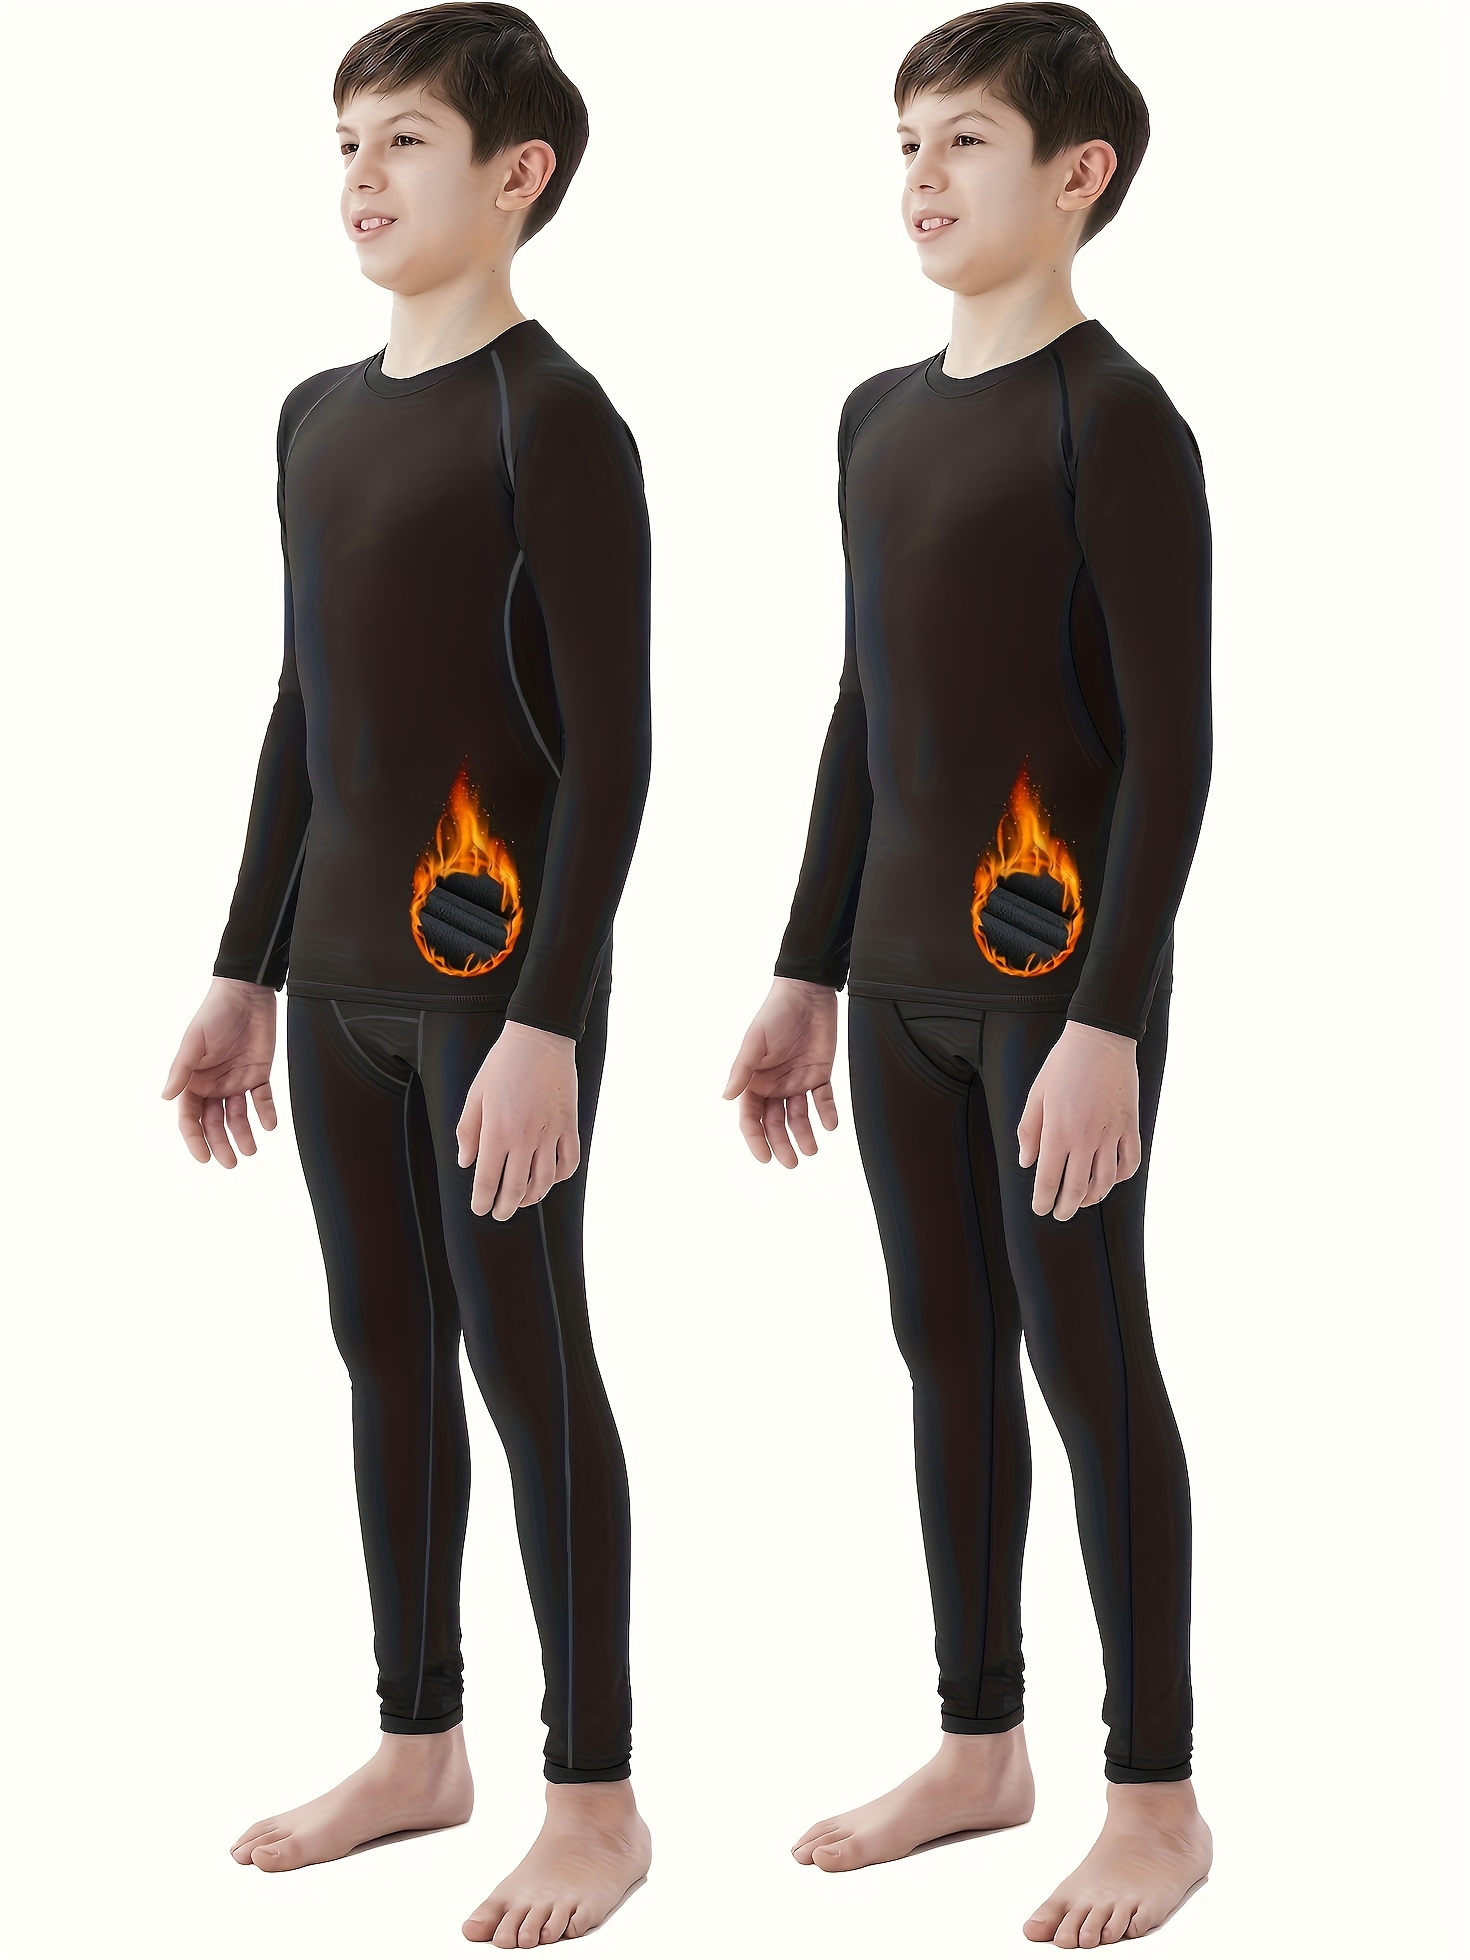  HOPLYNN Men's Thermal Compression Pants,Winter Fleece